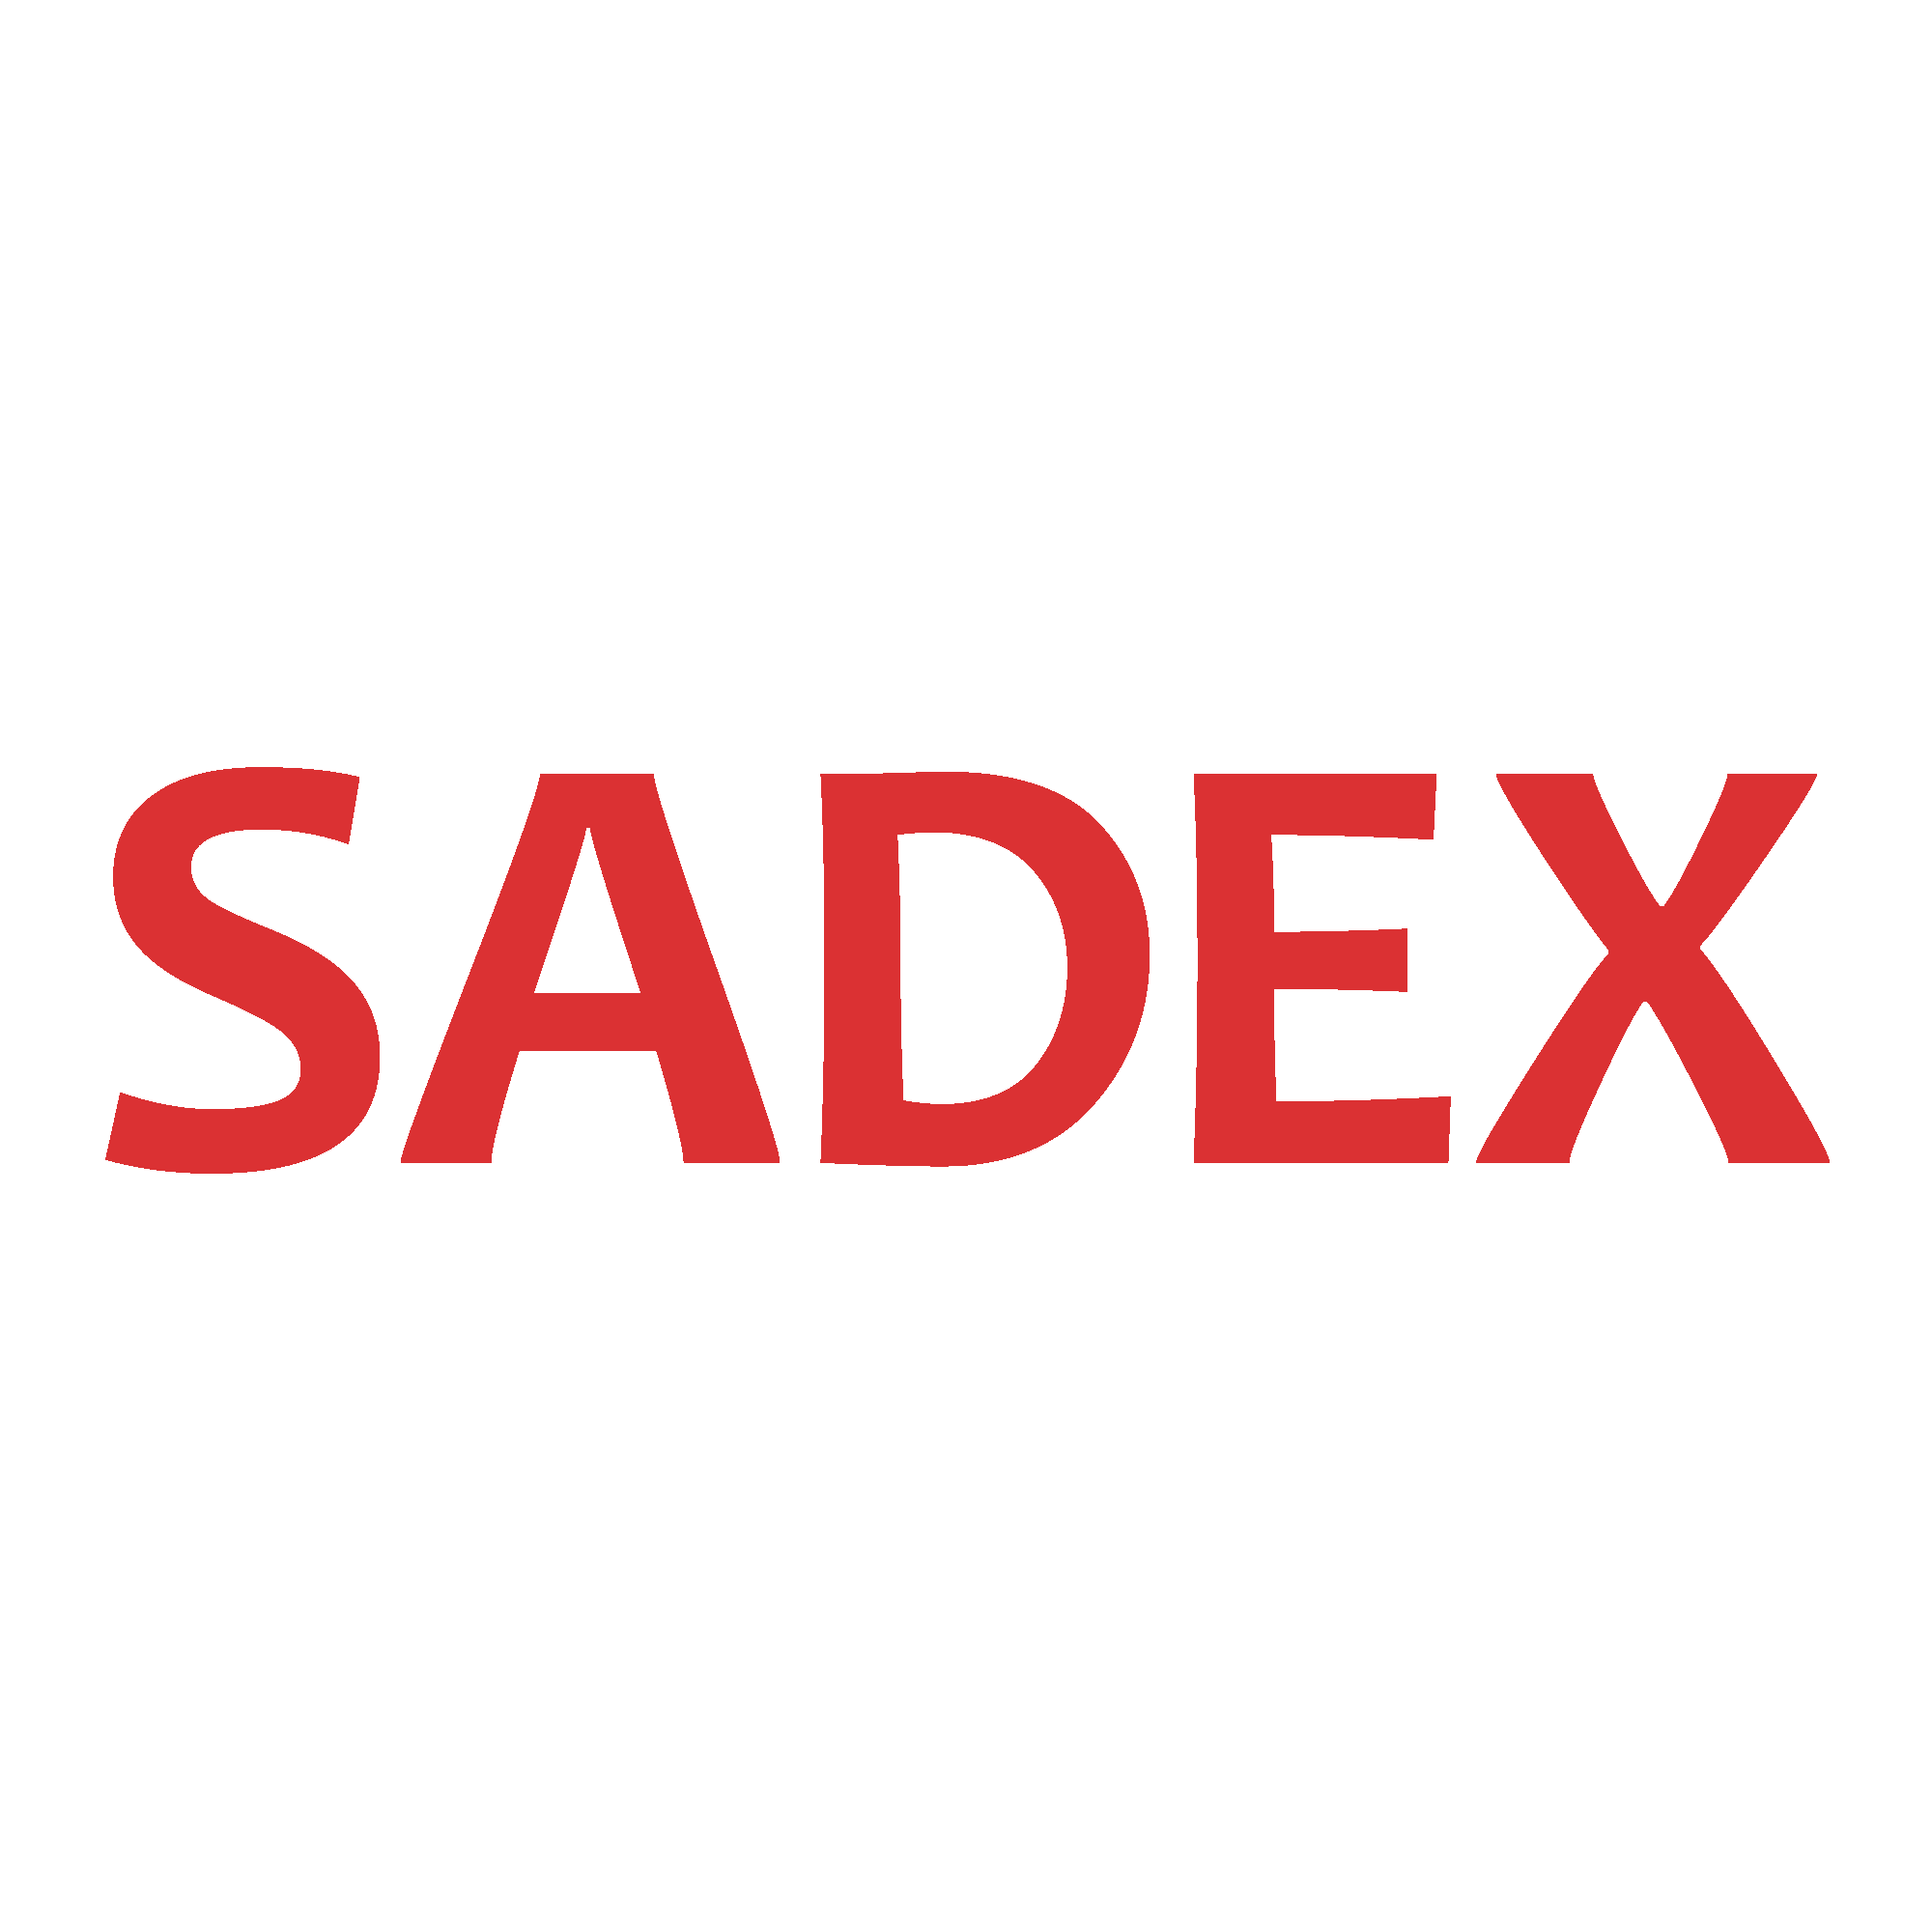 Sadex firman logo